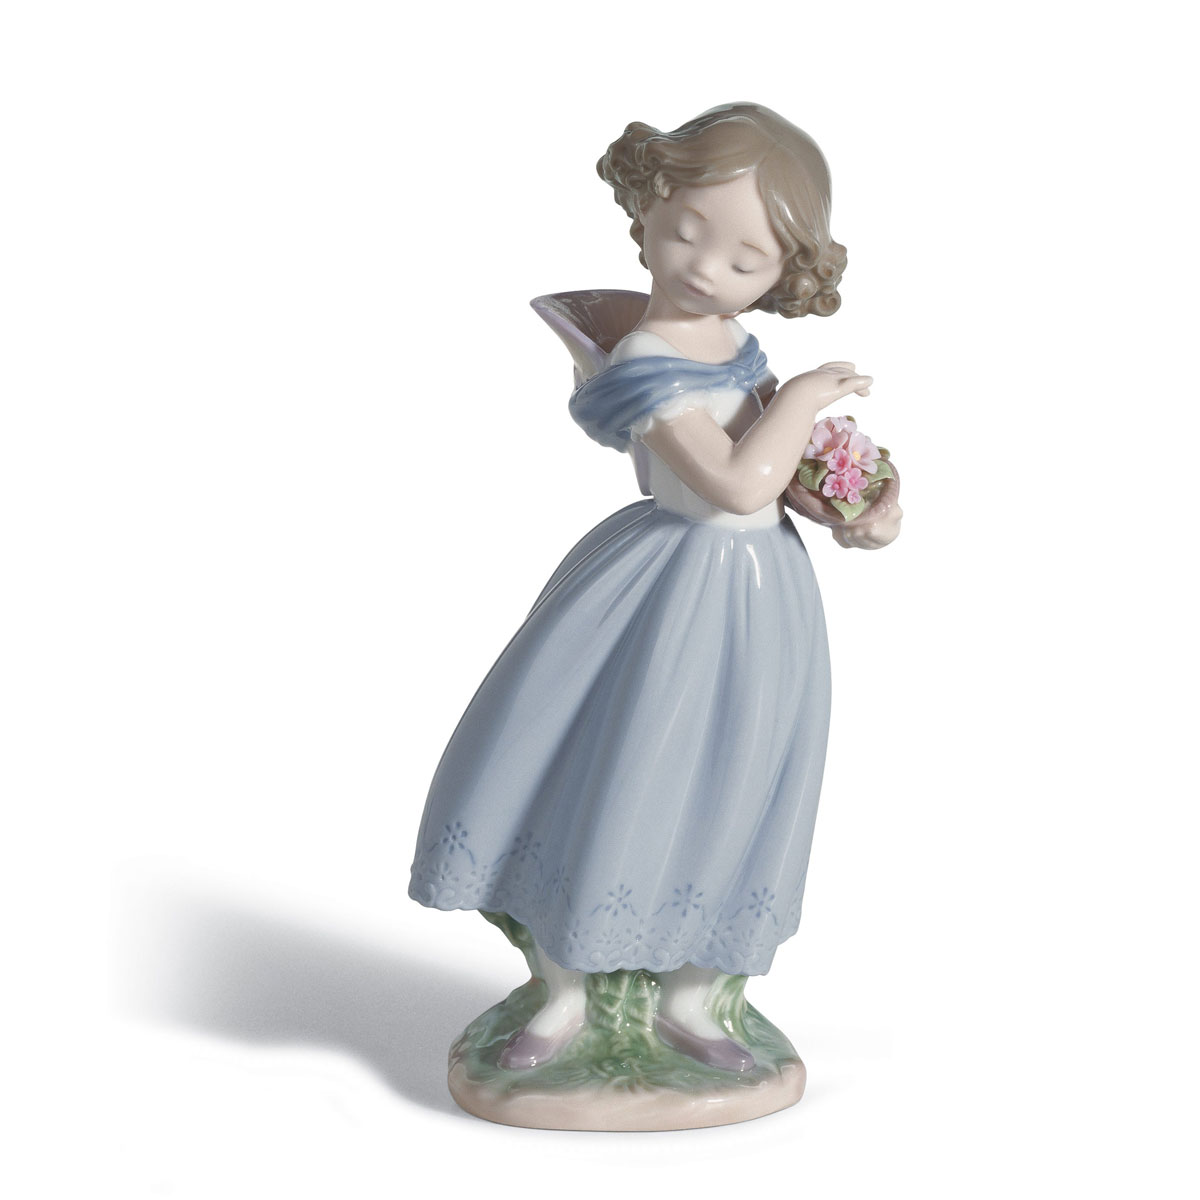 Lladro Classic Sculpture, Adorable Innocence Girl Figurine